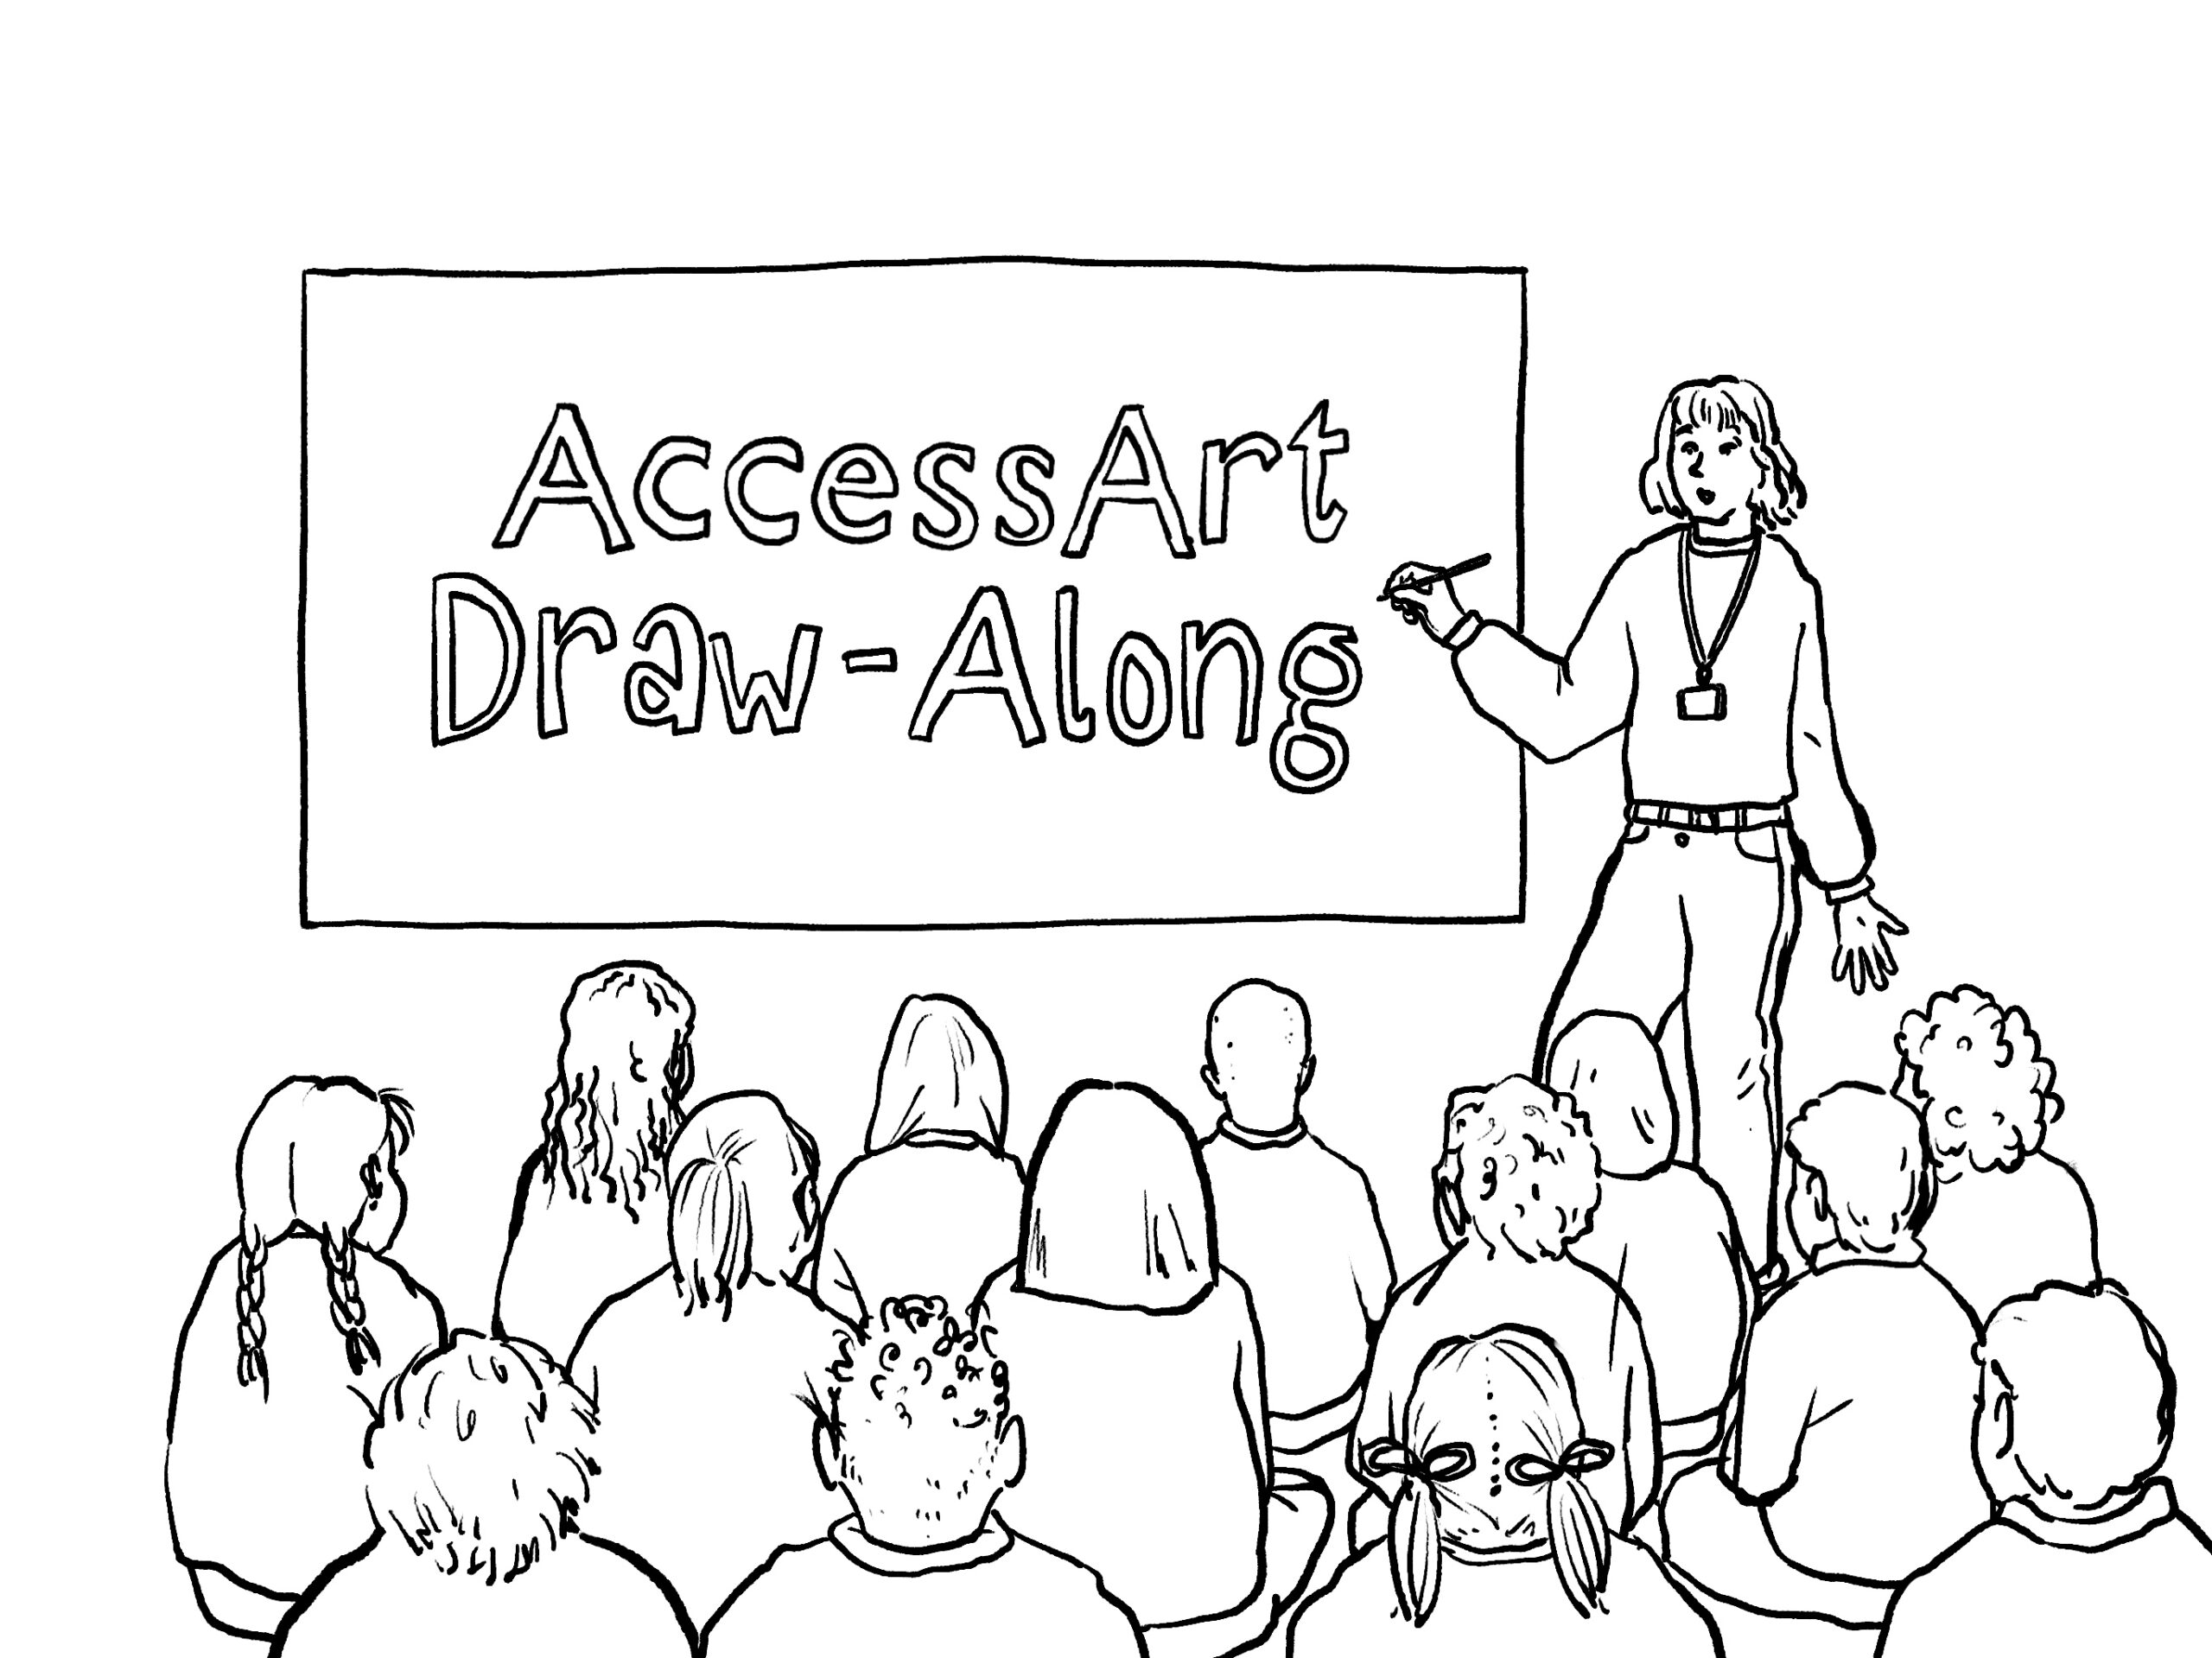 AccessArt Draw-Along